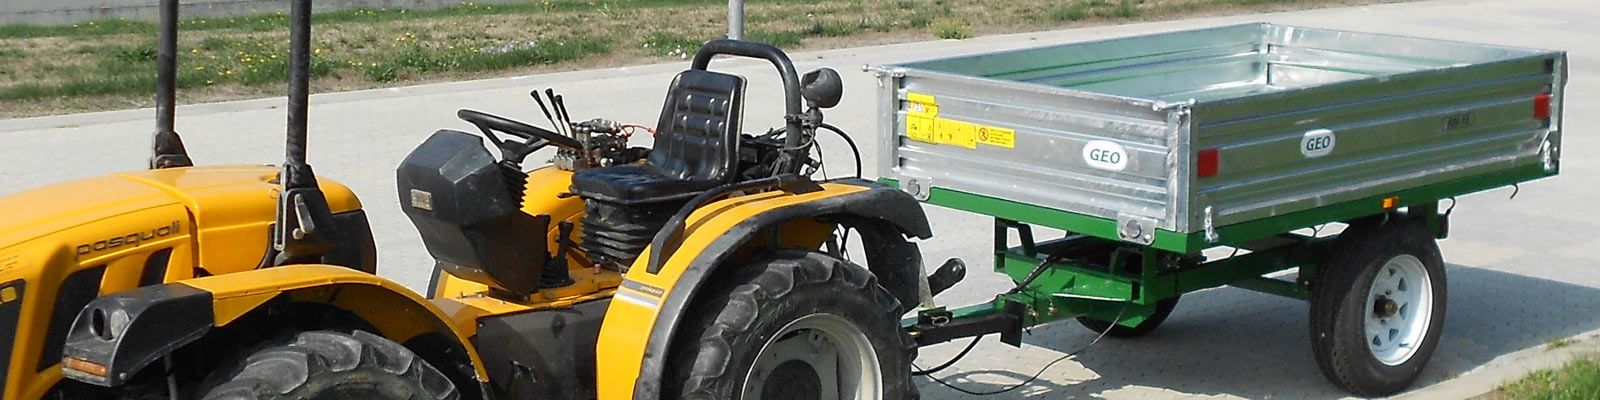 Geo Agric macchine agricole usate, news